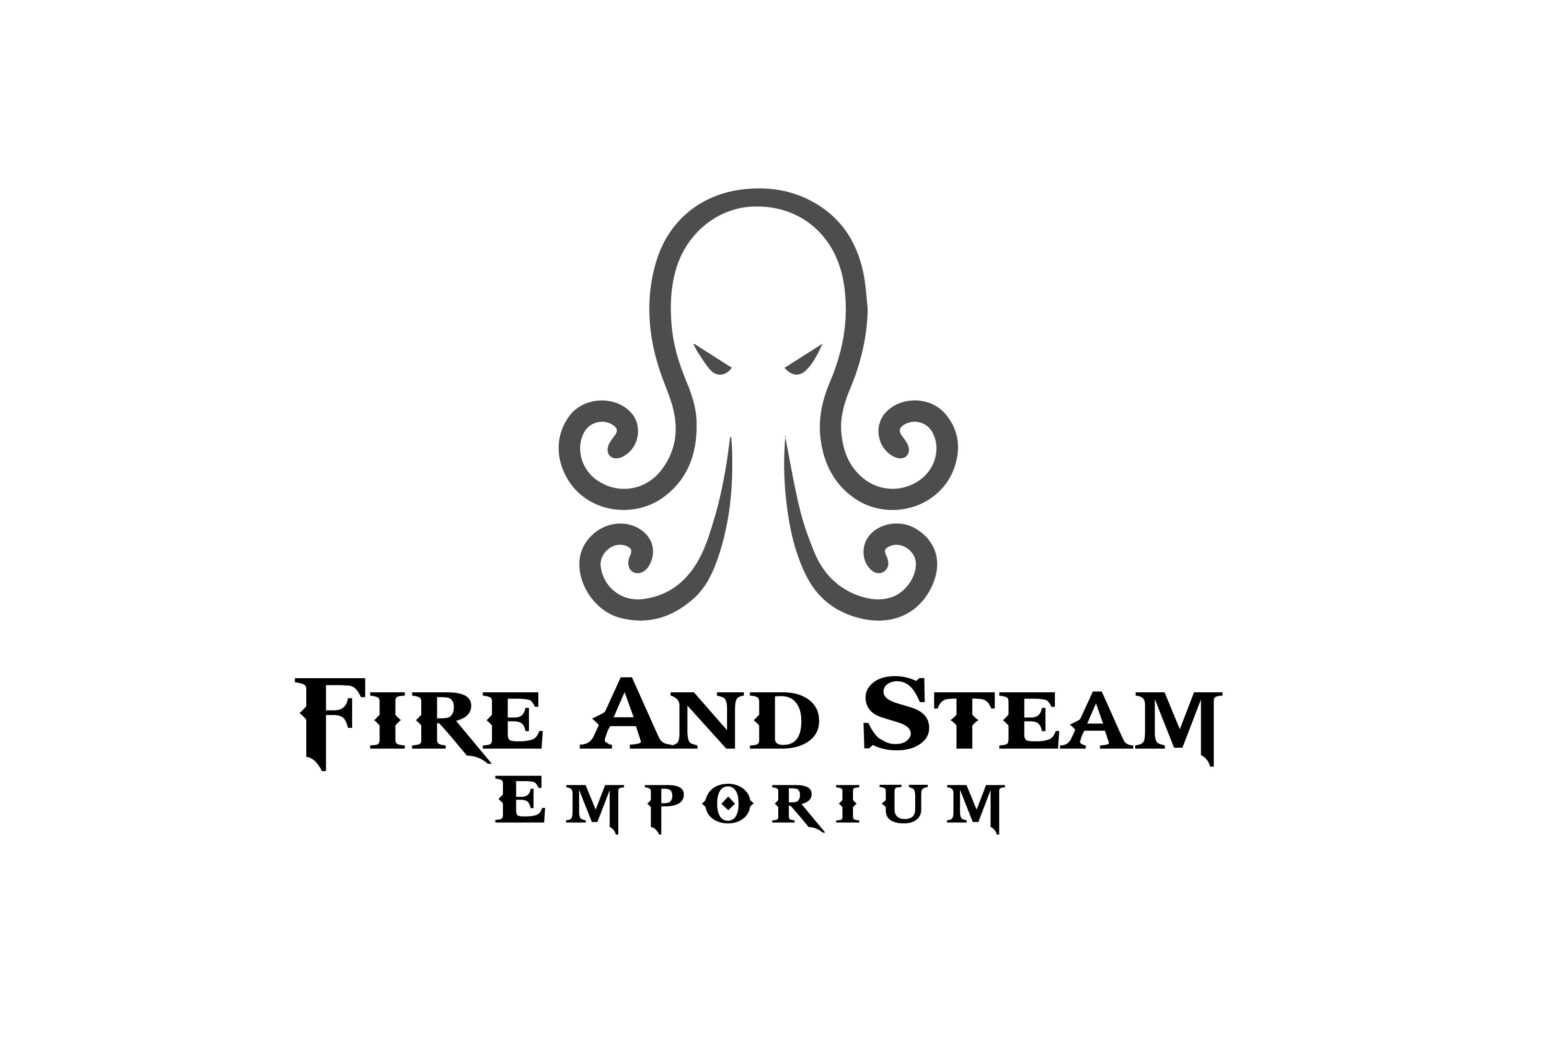 Fire and Steam Emporium